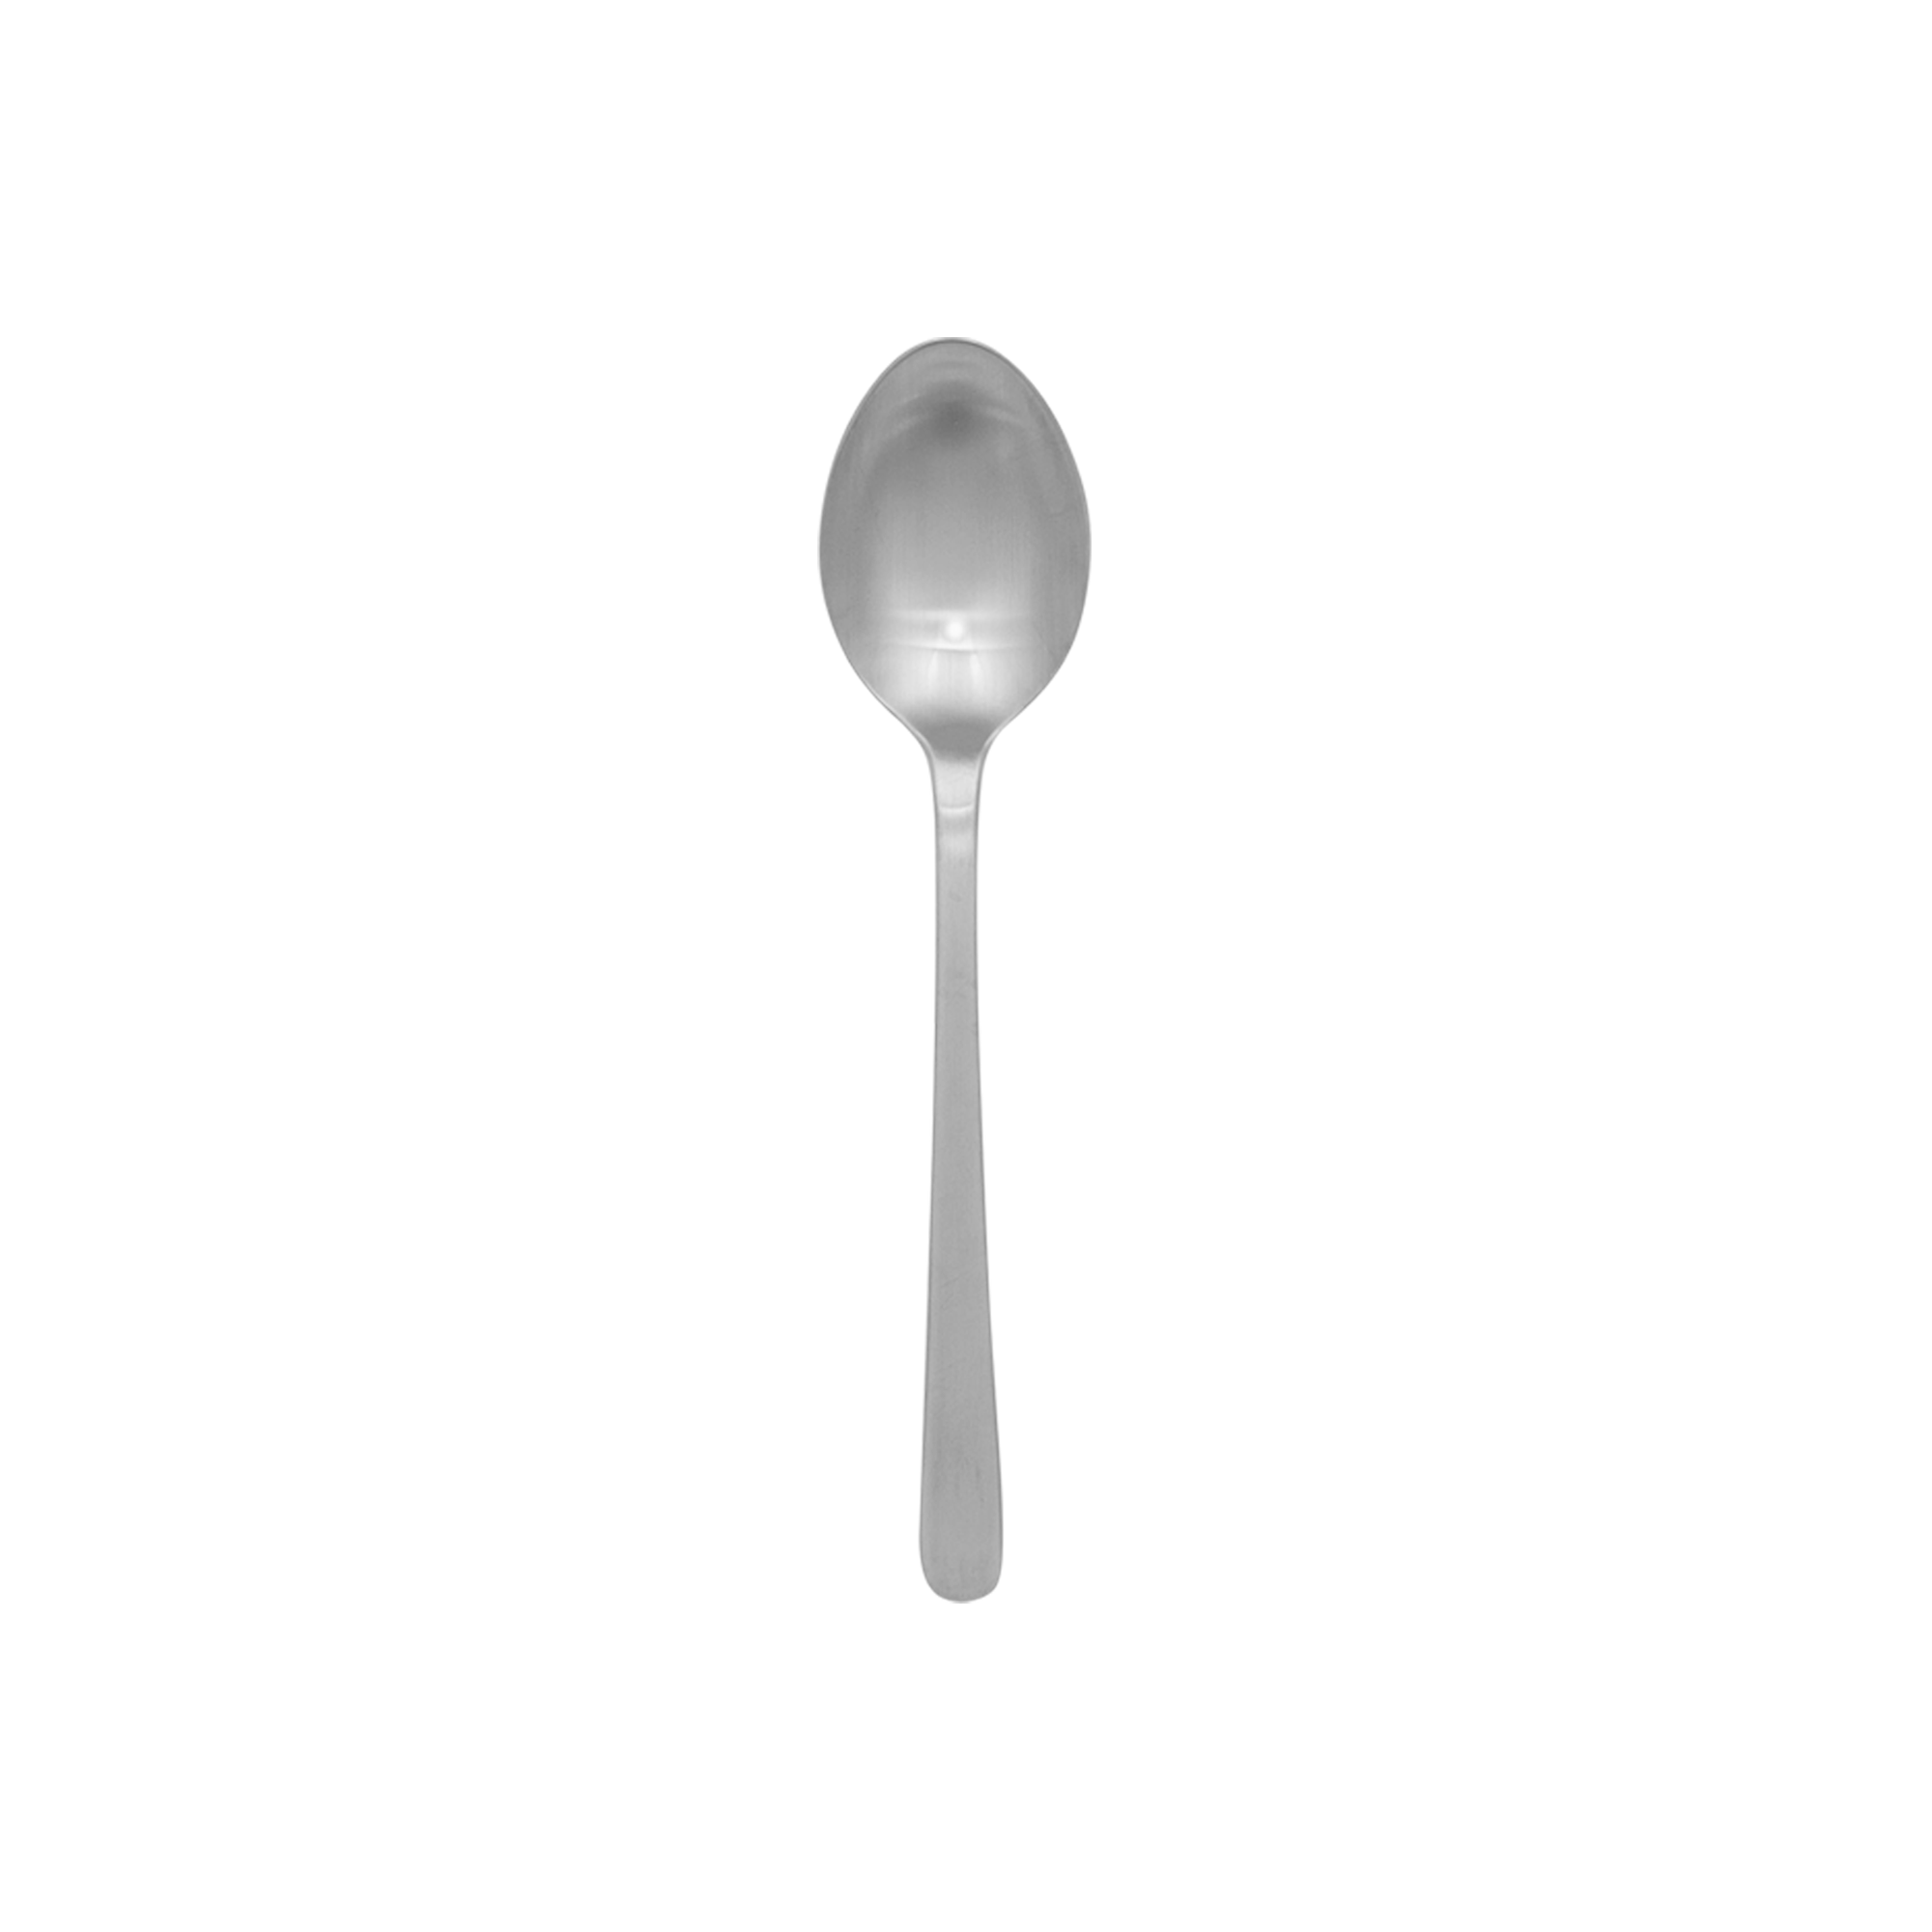 Dessert spoon small